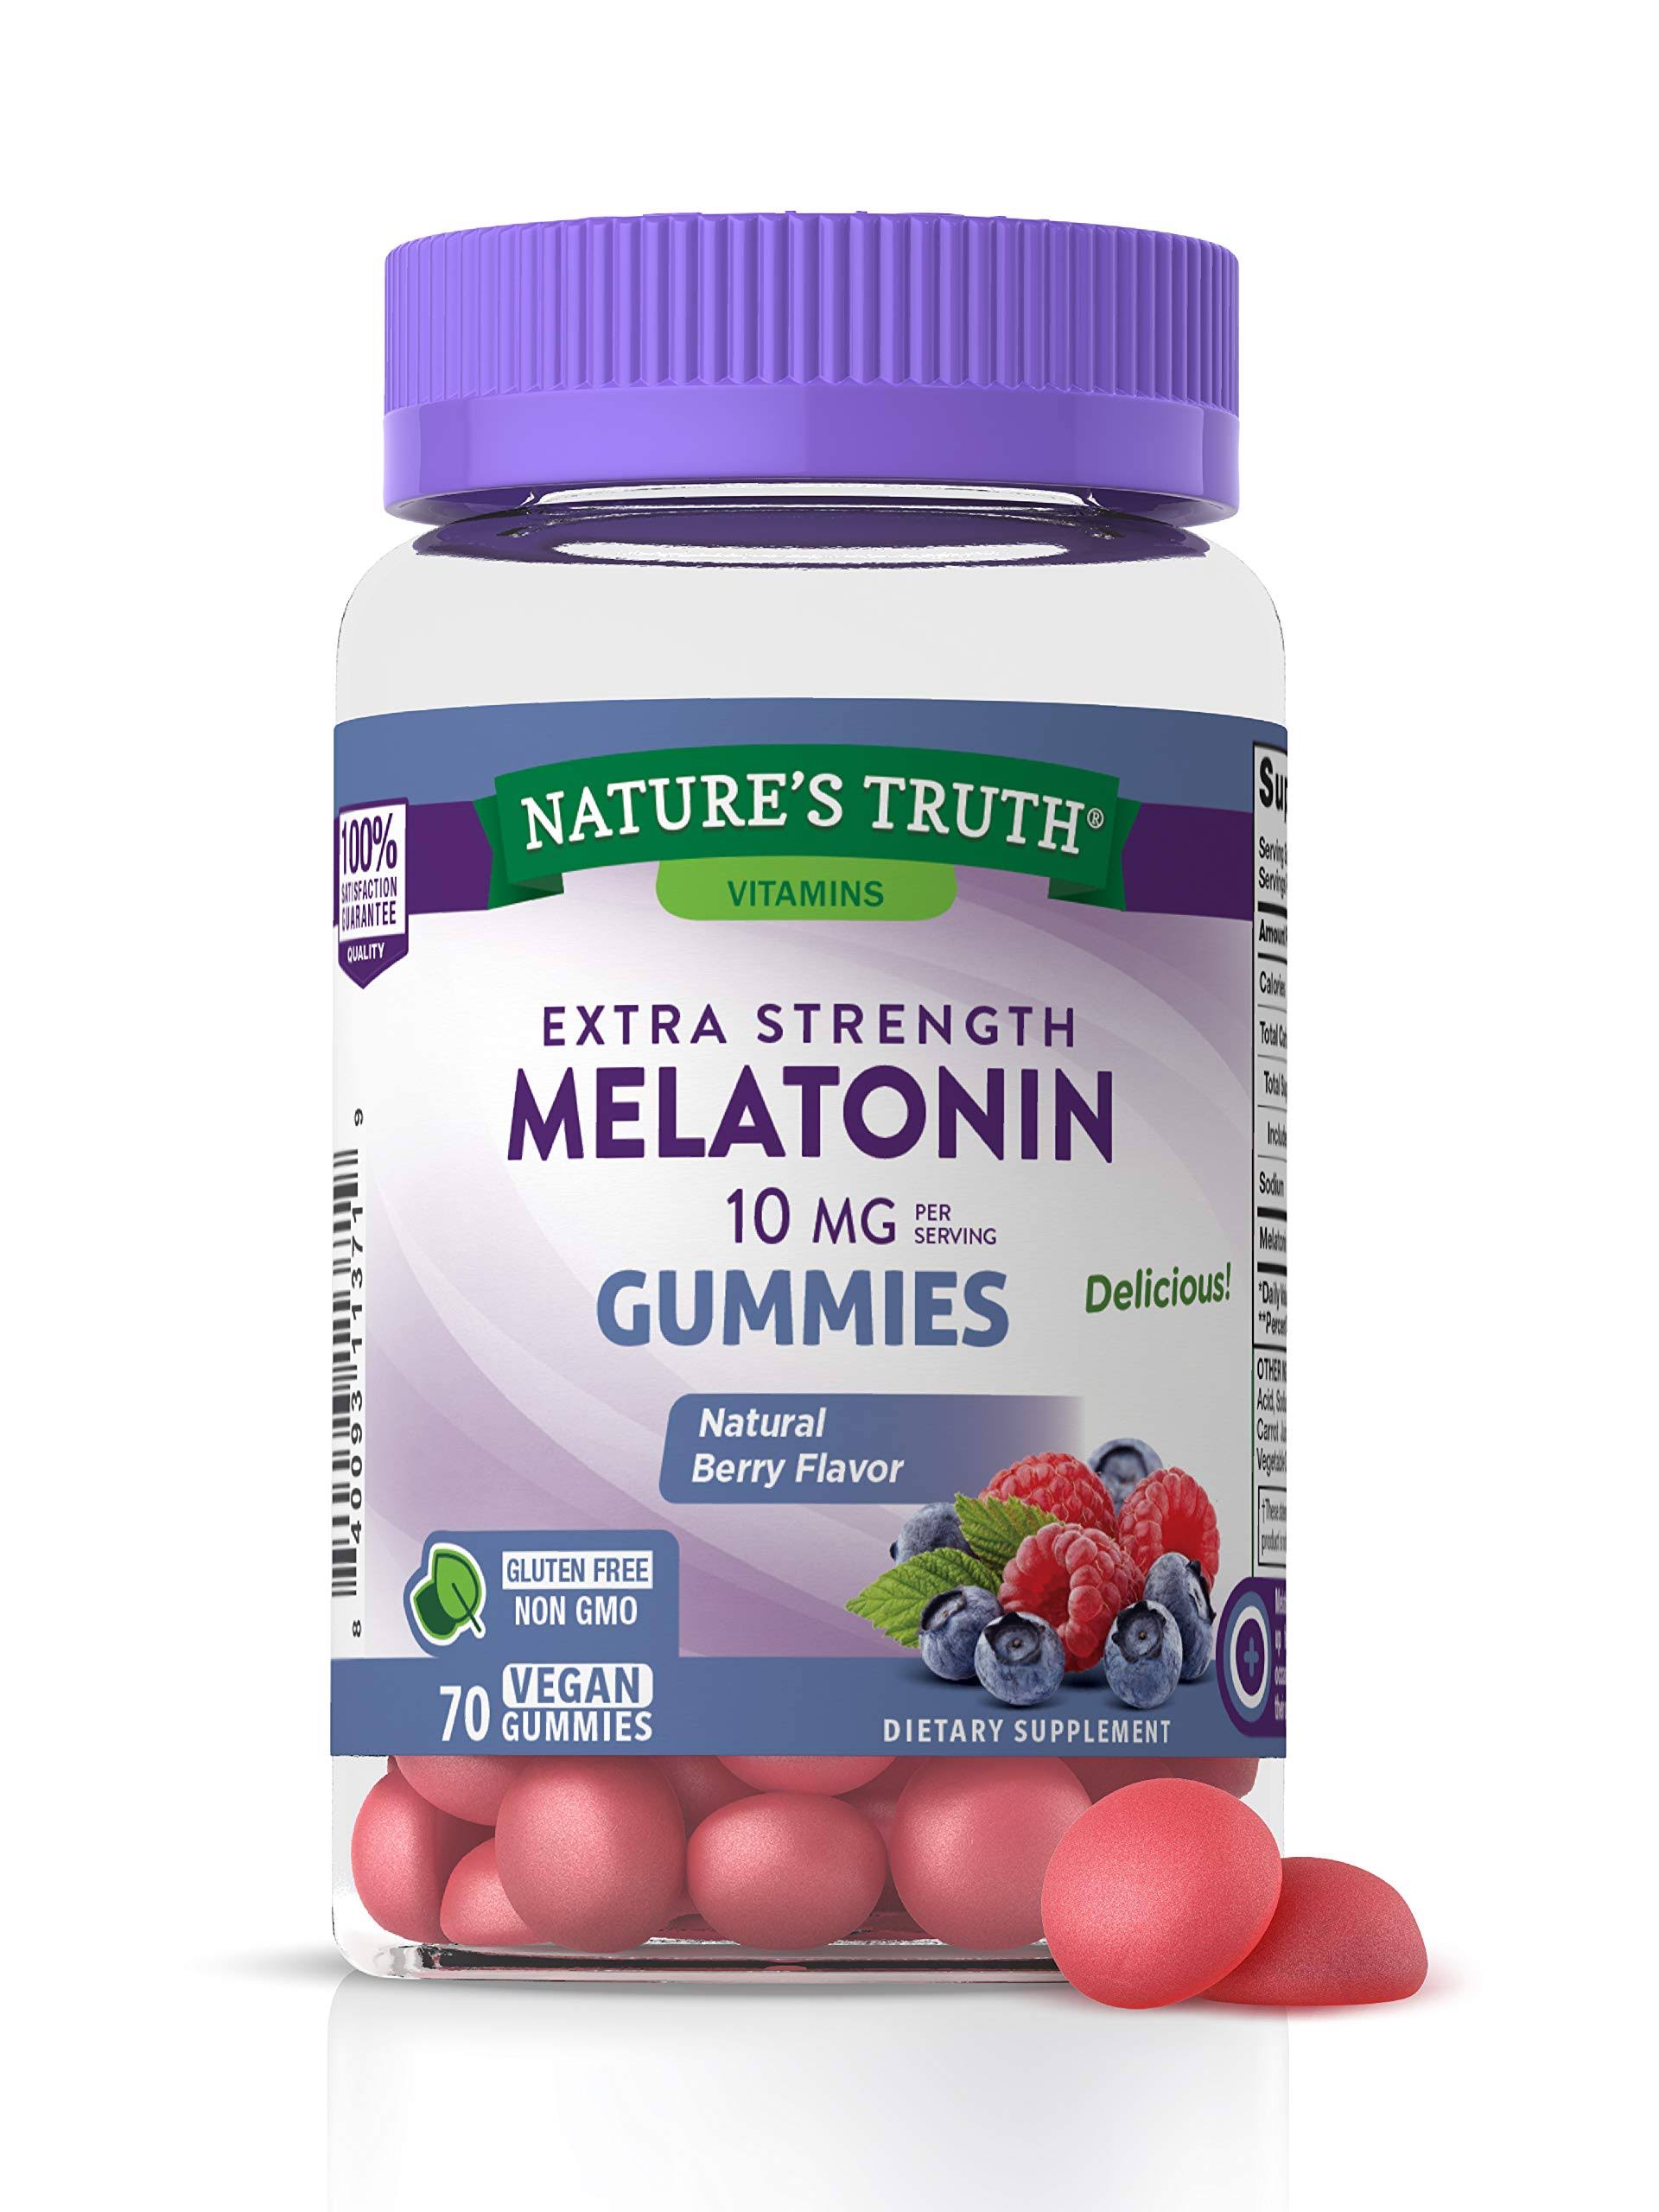 Nature's Truth Melatonin, Extra Strength, 10 mg, Gummies, Natural Berry Flavor - 70 gummies